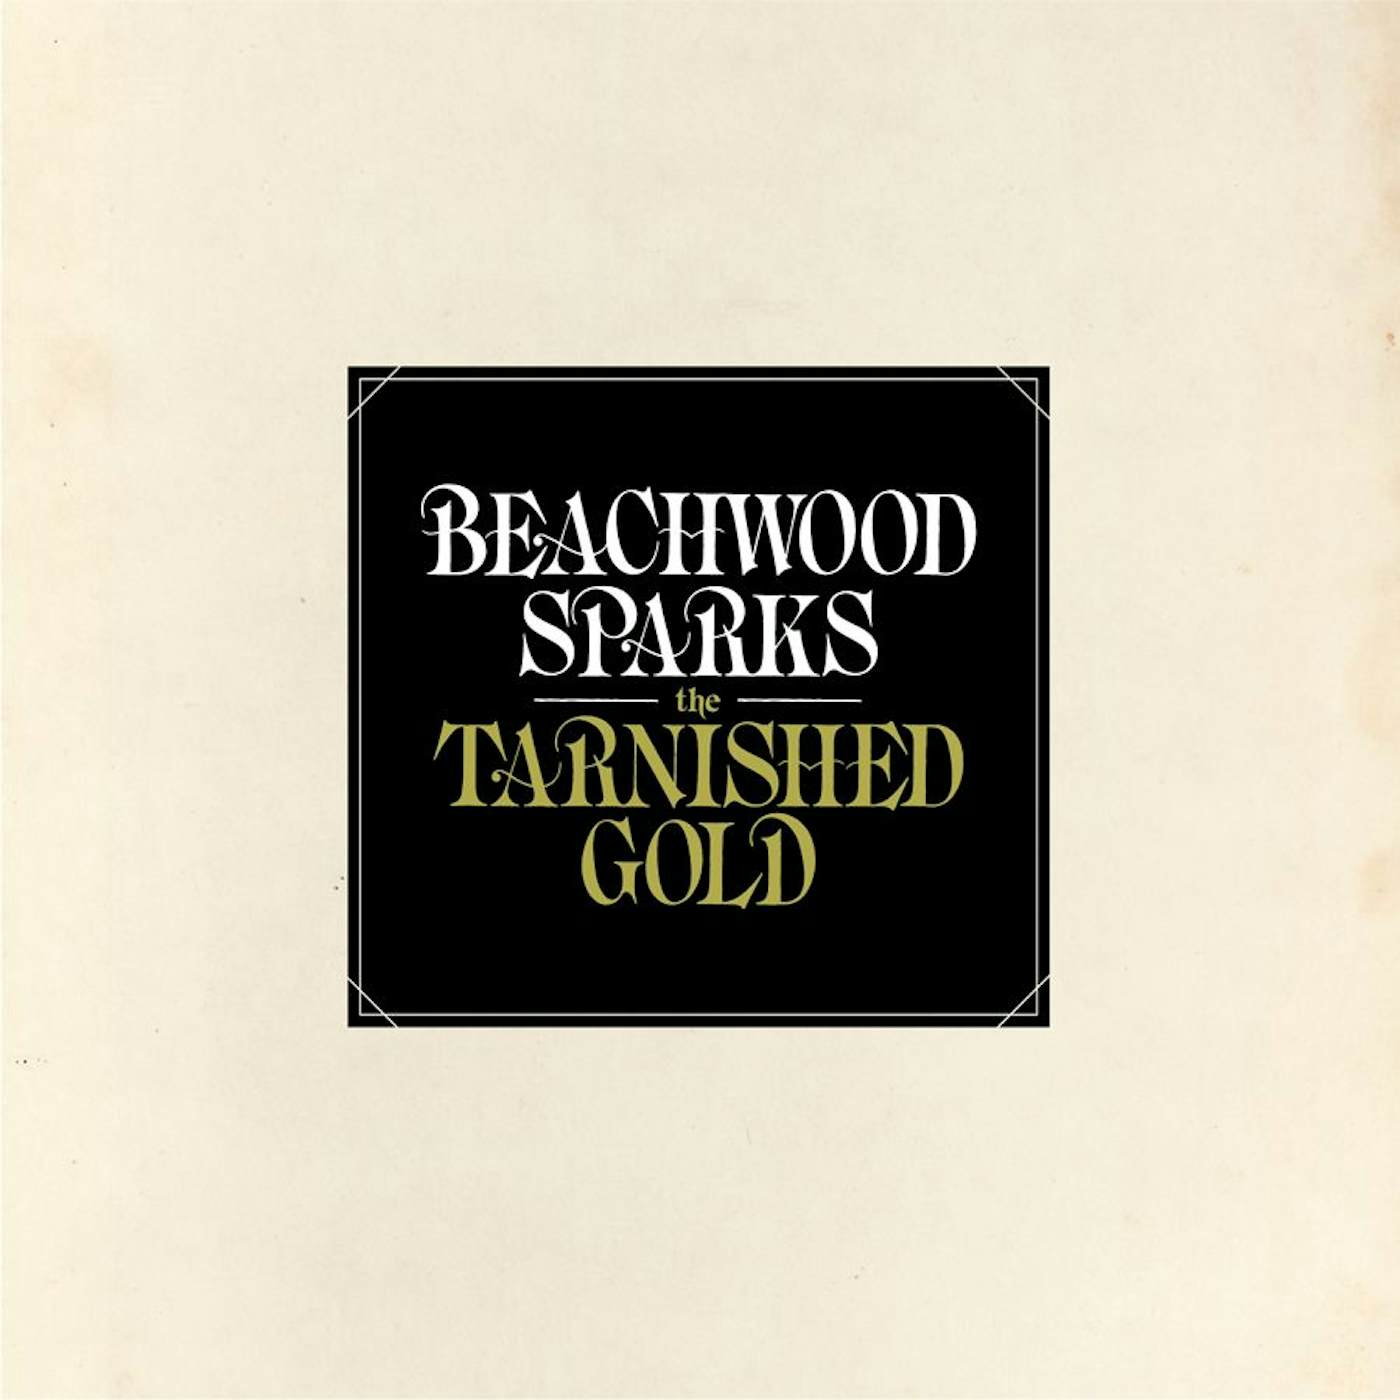 Beachwood Sparks TARNISHED GOLD CD